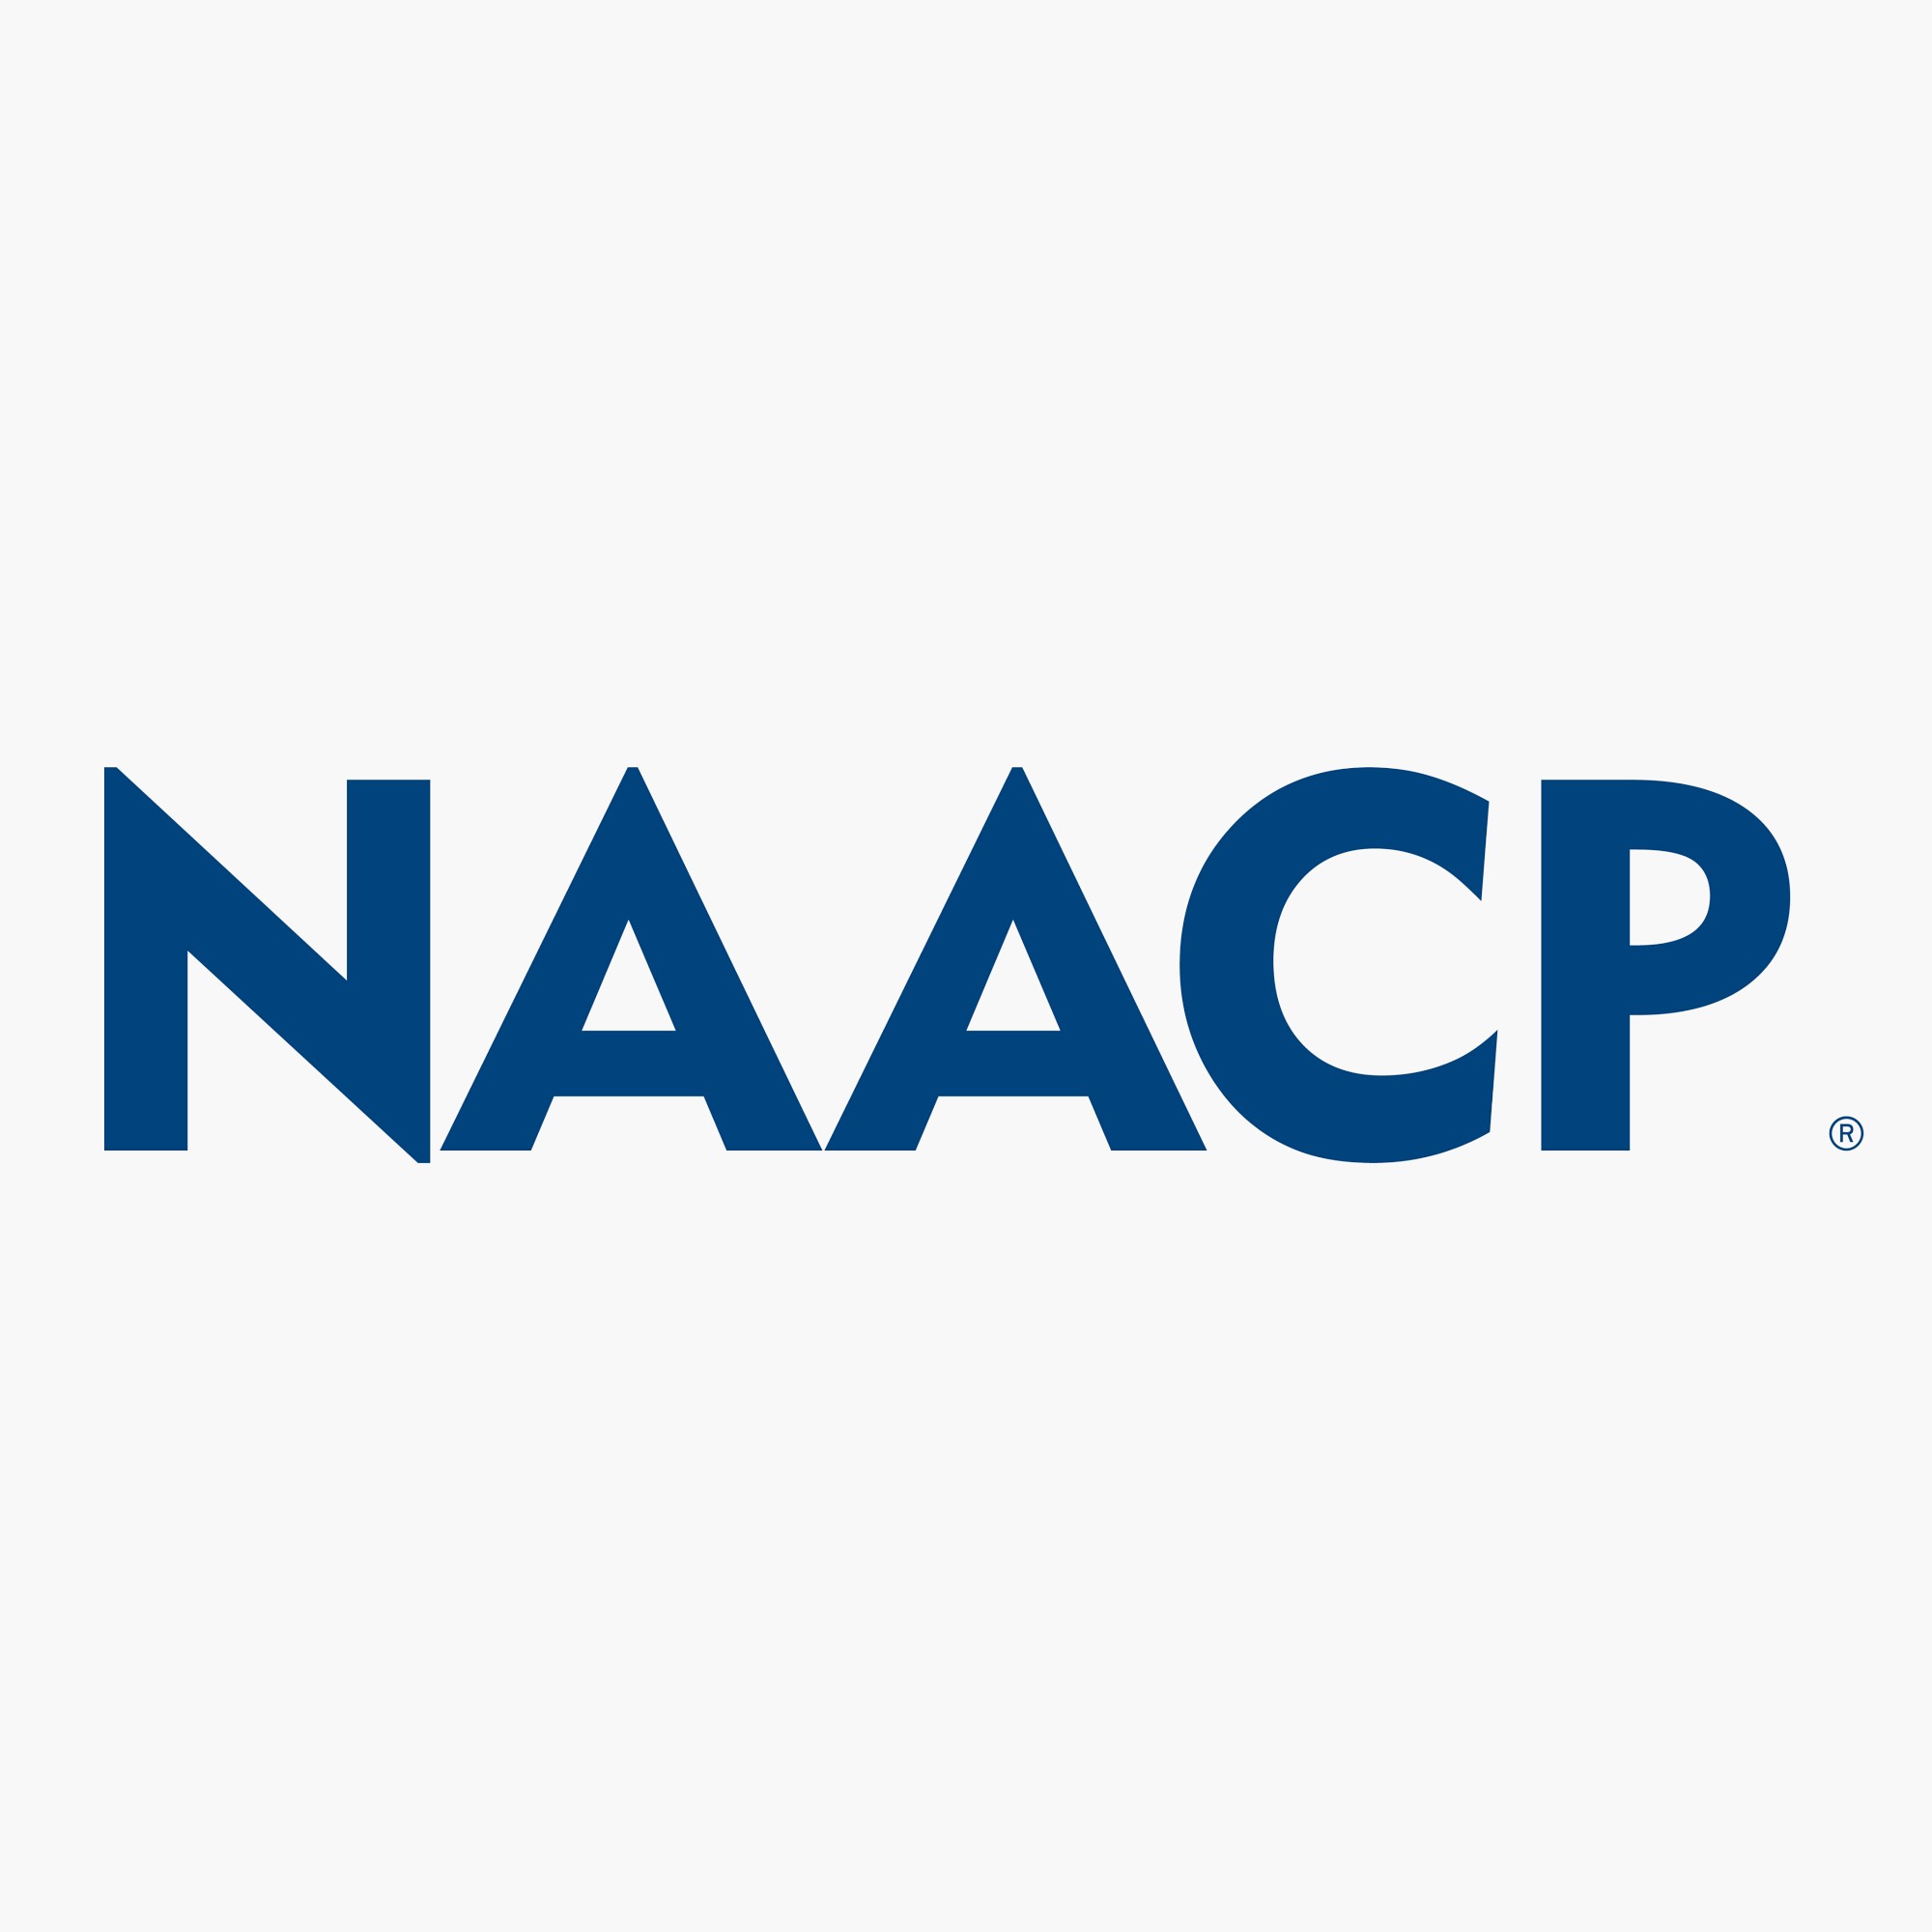 NAACP Donation